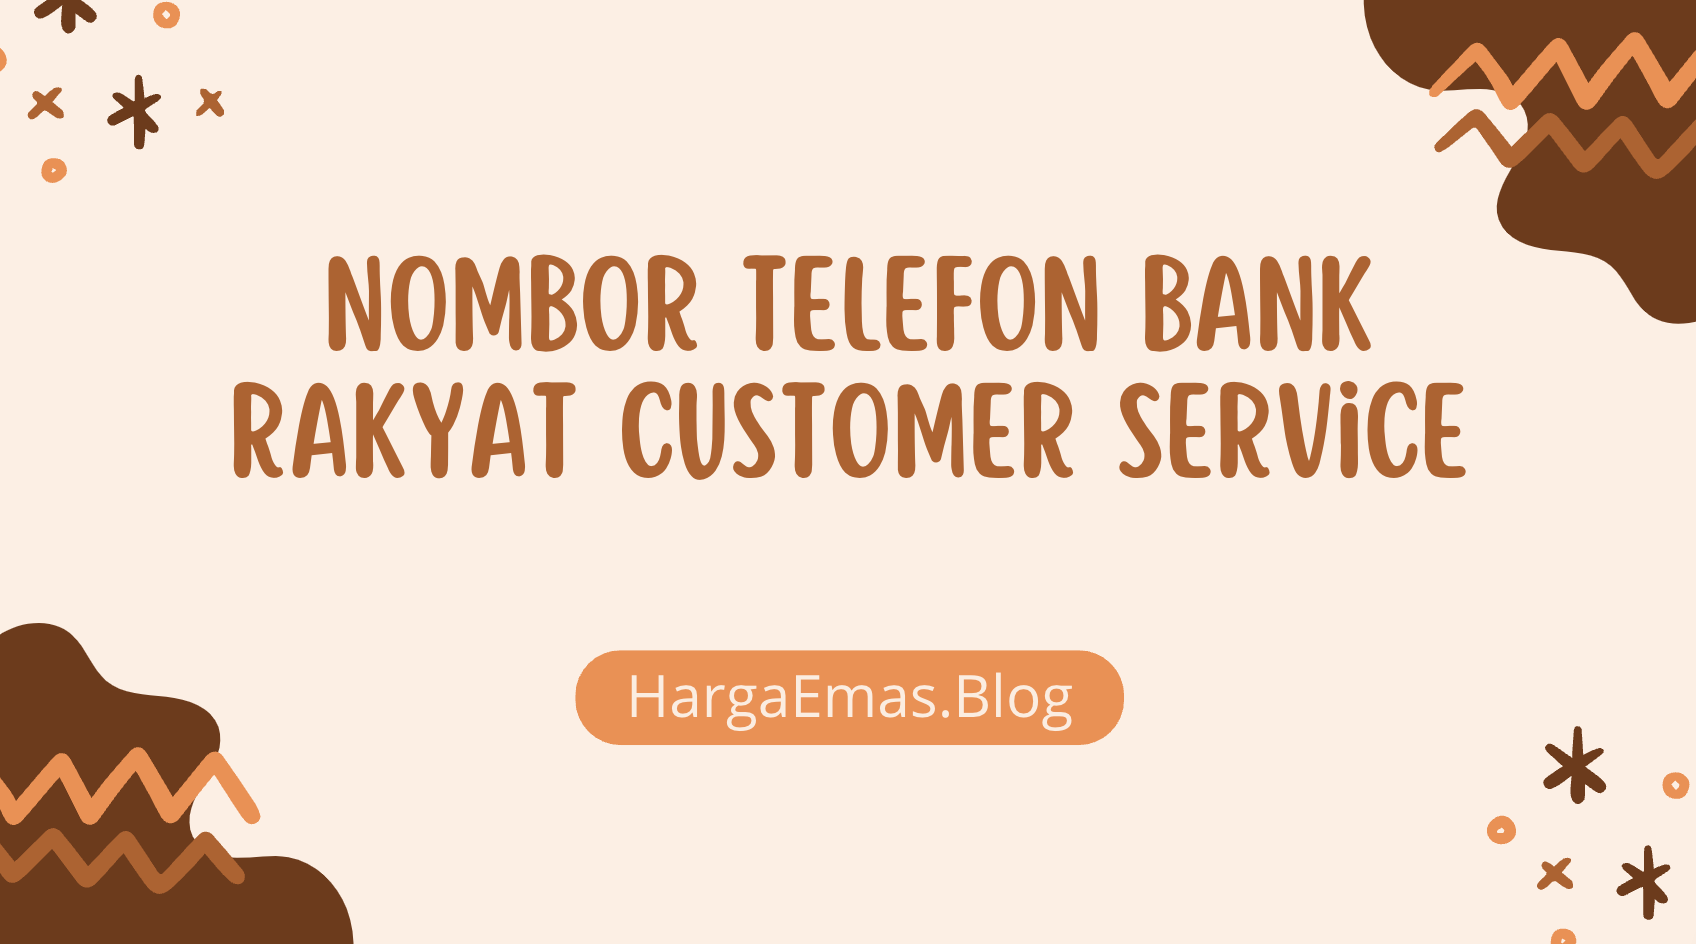 Nombor Telefon Bank Rakyat Customer Service